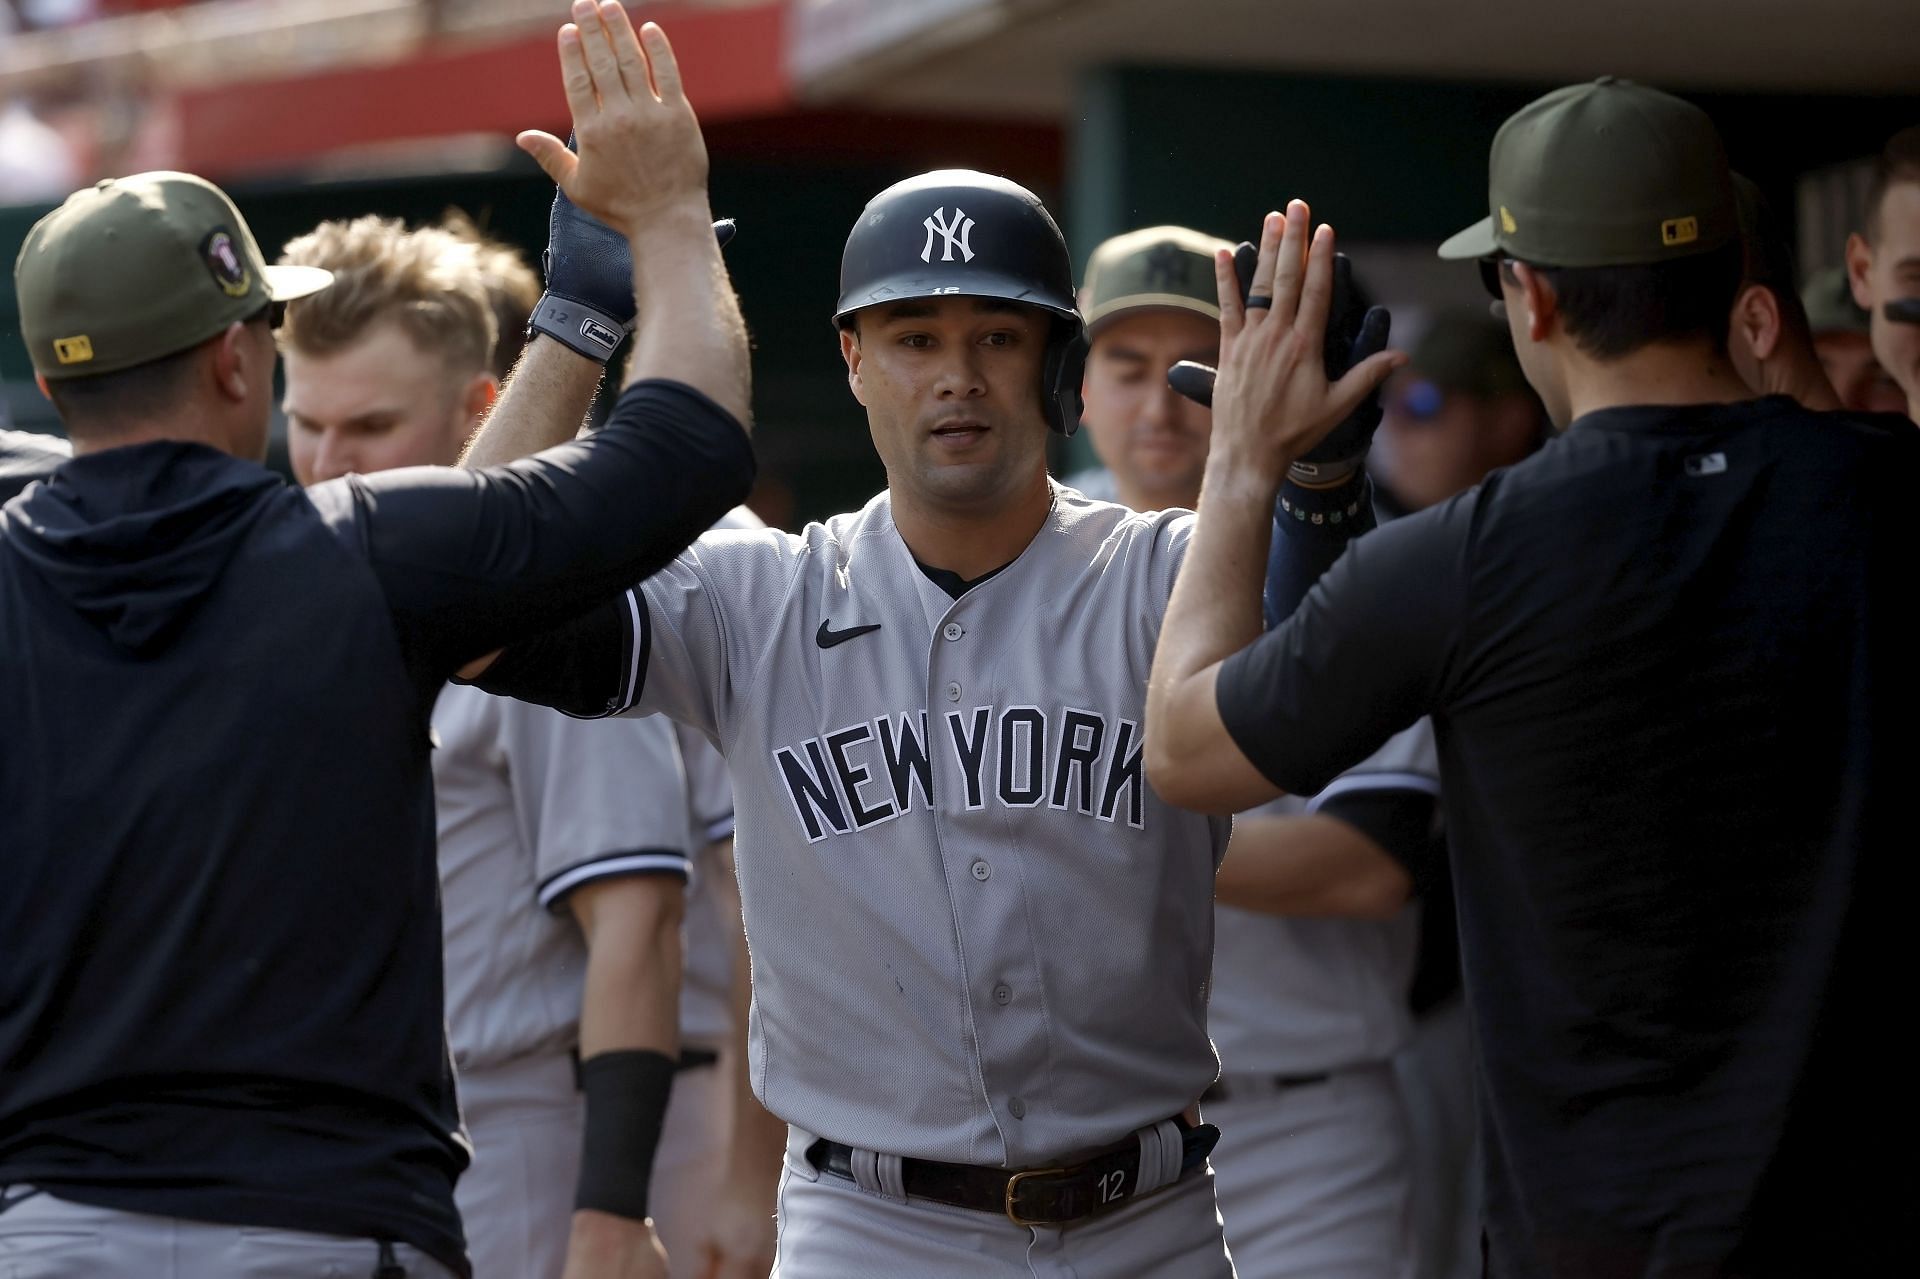 Isiah Kiner-Falefa becoming Yankees stud after starting season 'scared' 